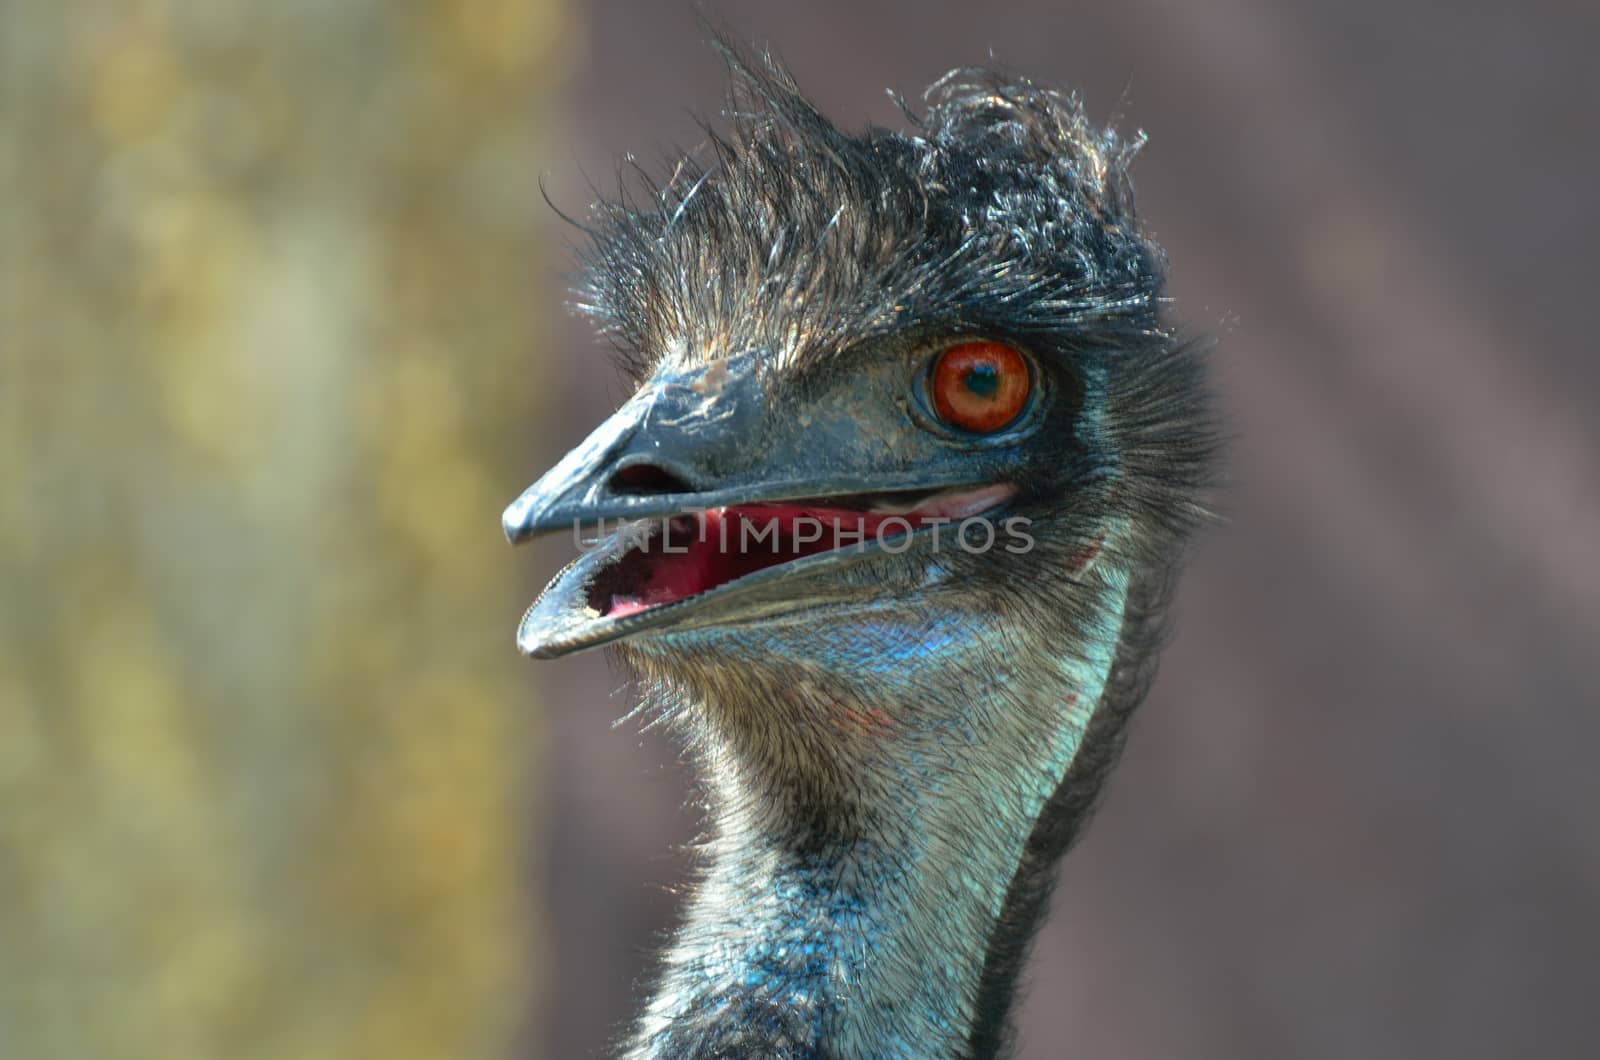 Cute head of Emu